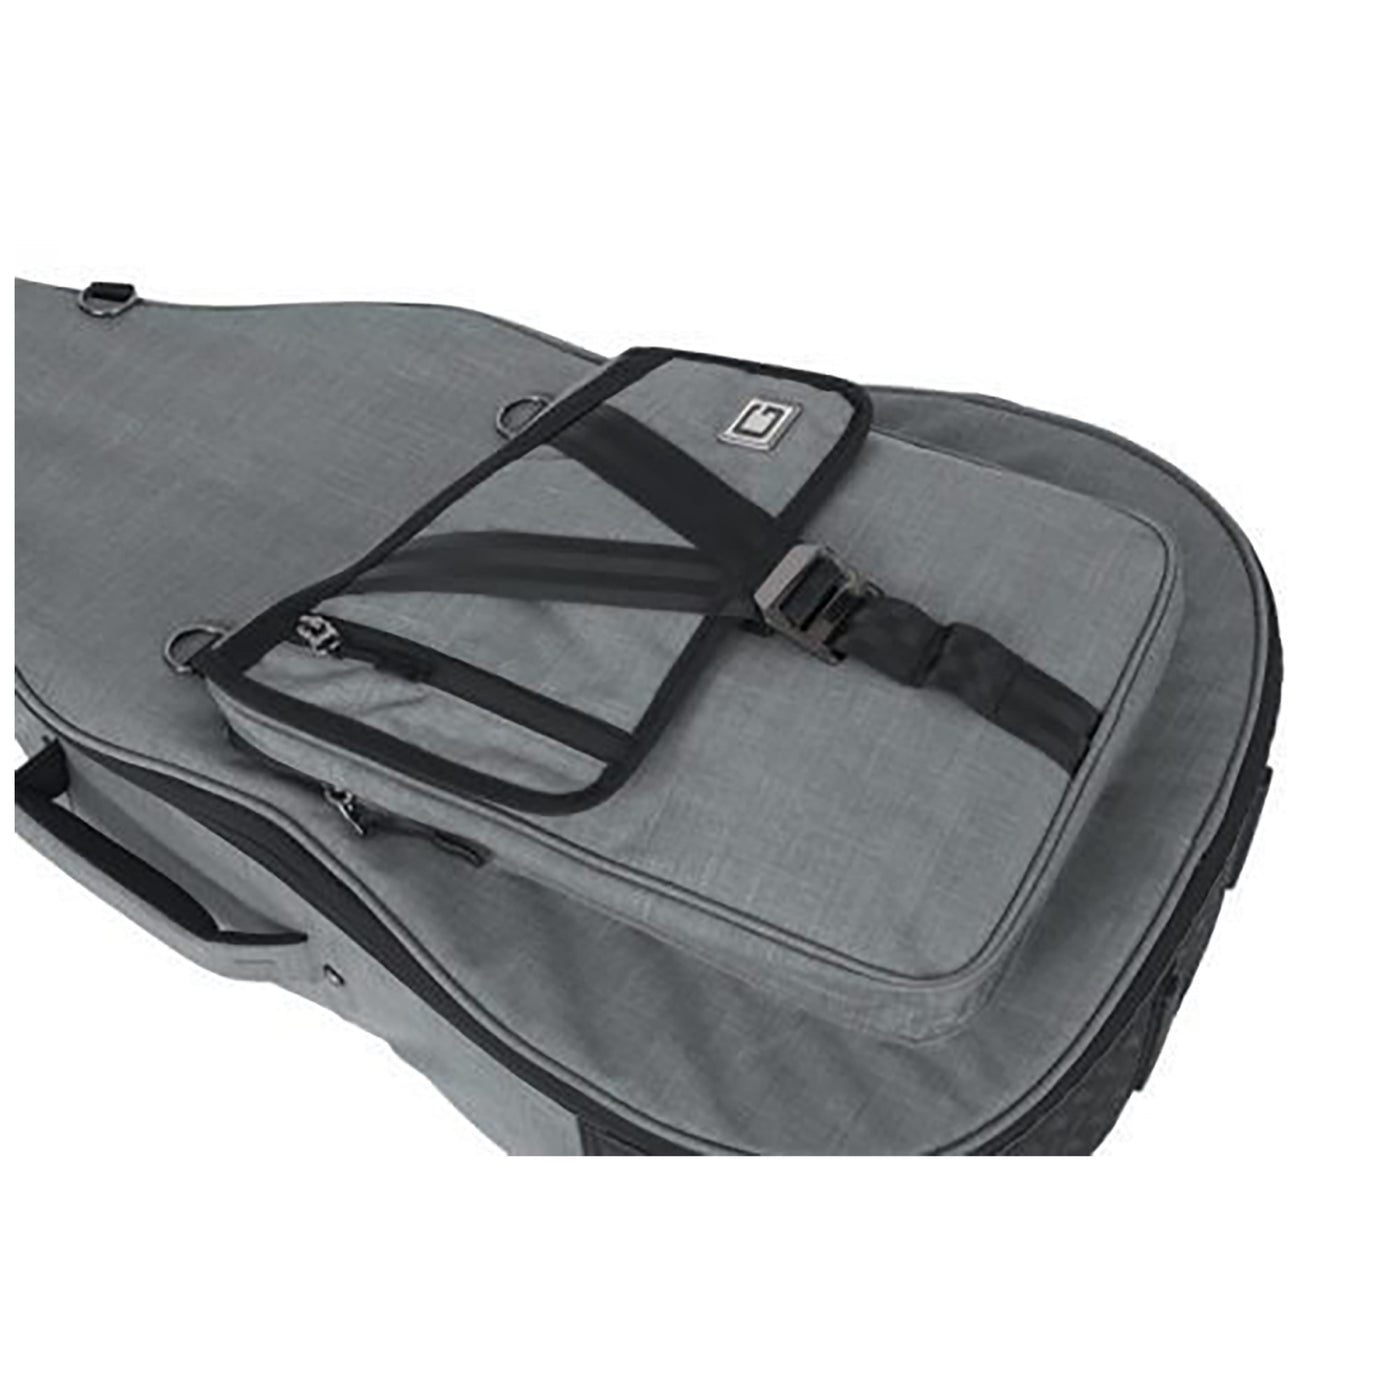 Transit Acoustic Guitar Bag; Light Grey